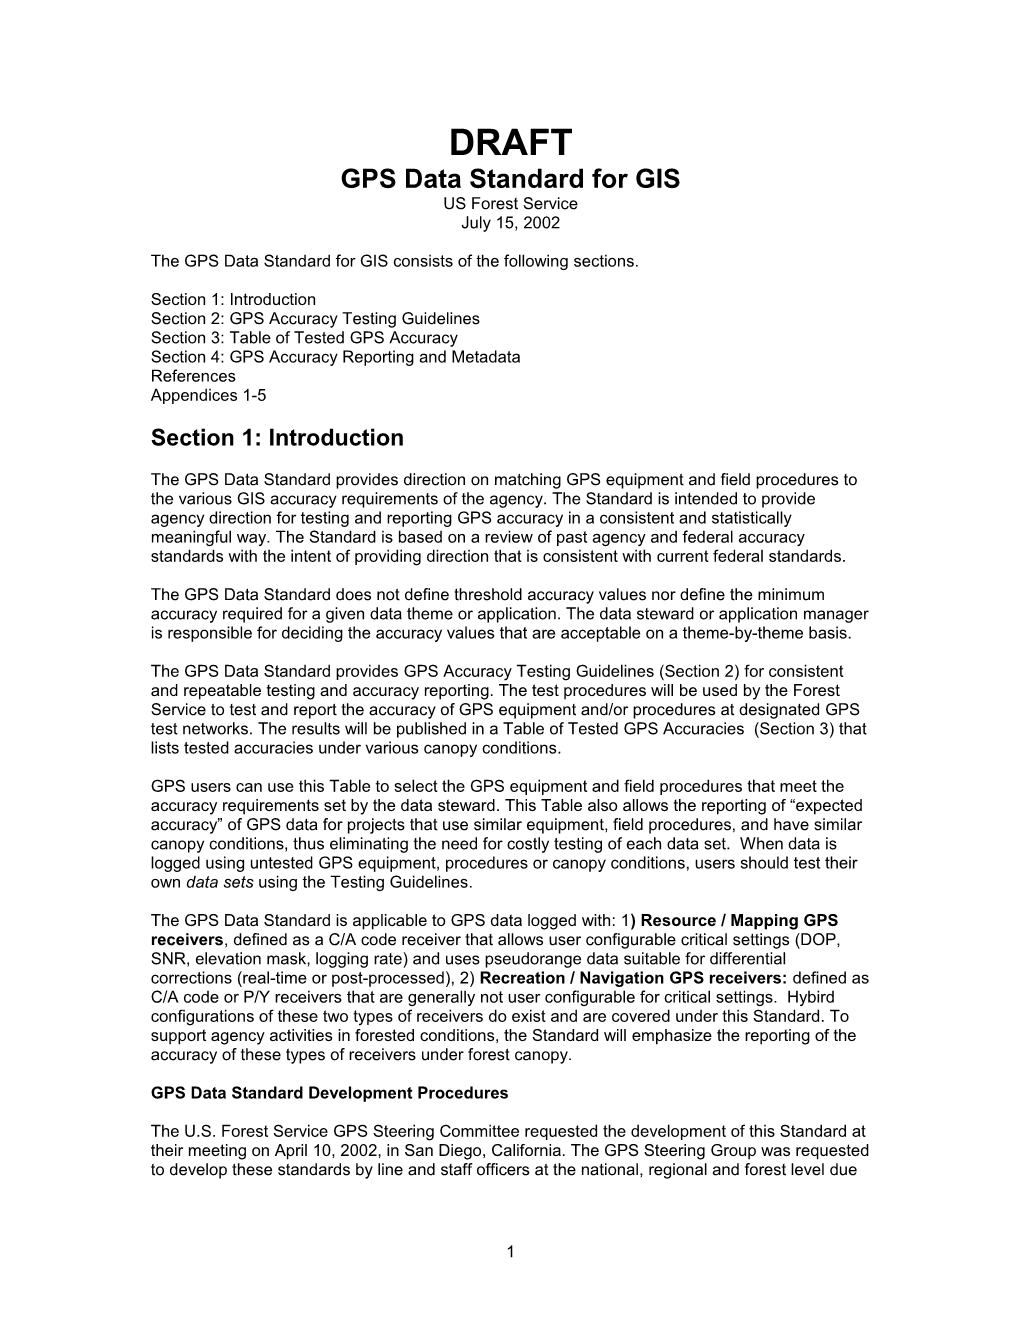 USFS GPS Data Standard for GIS